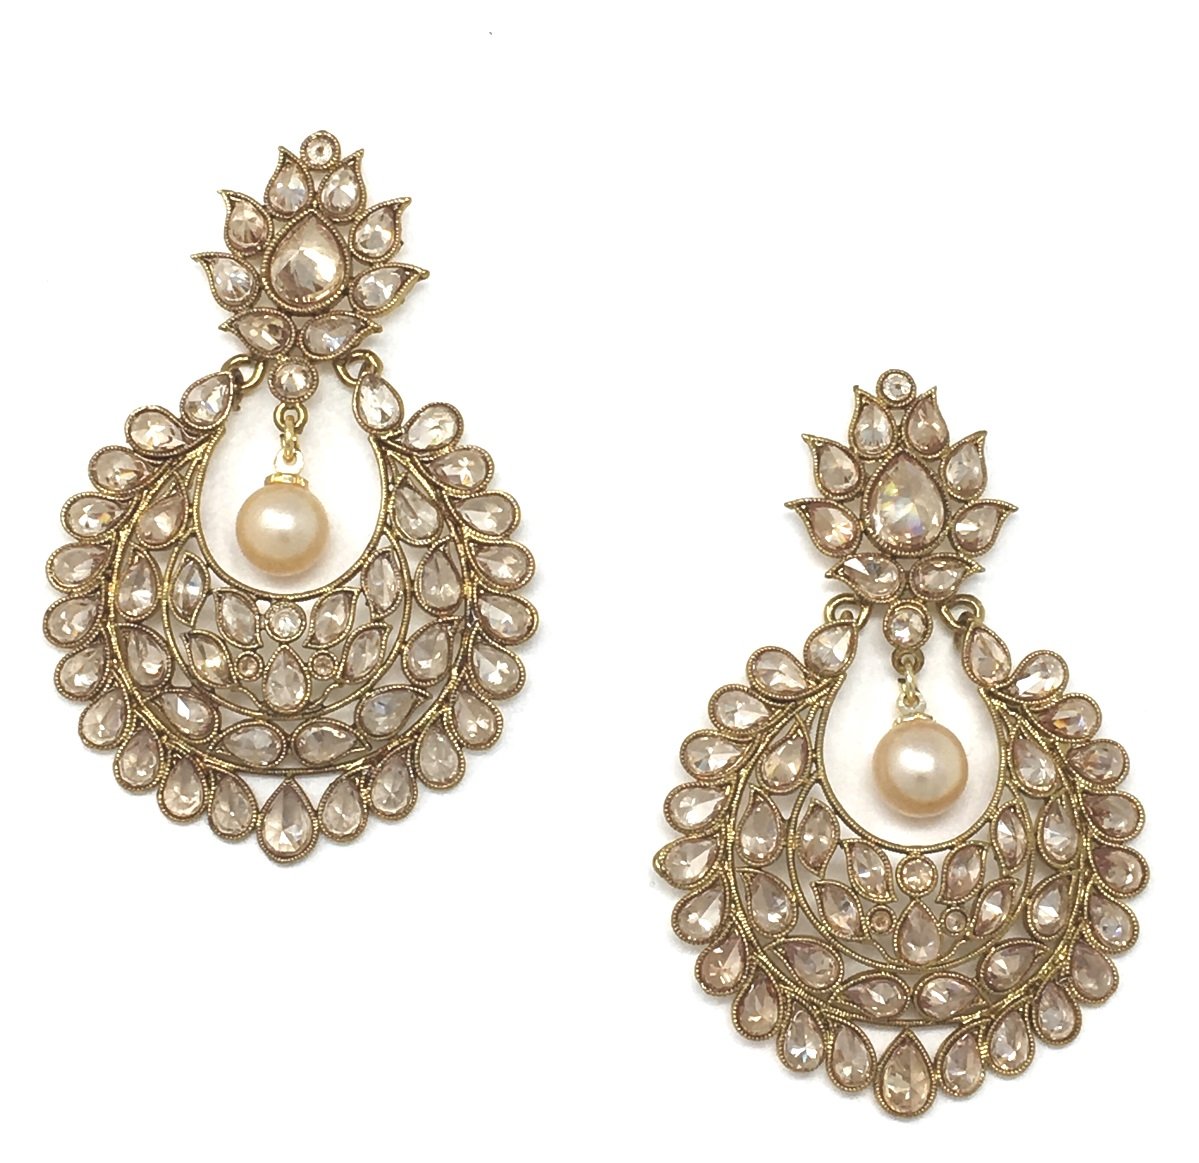 Share 232+ chandbali earrings designs